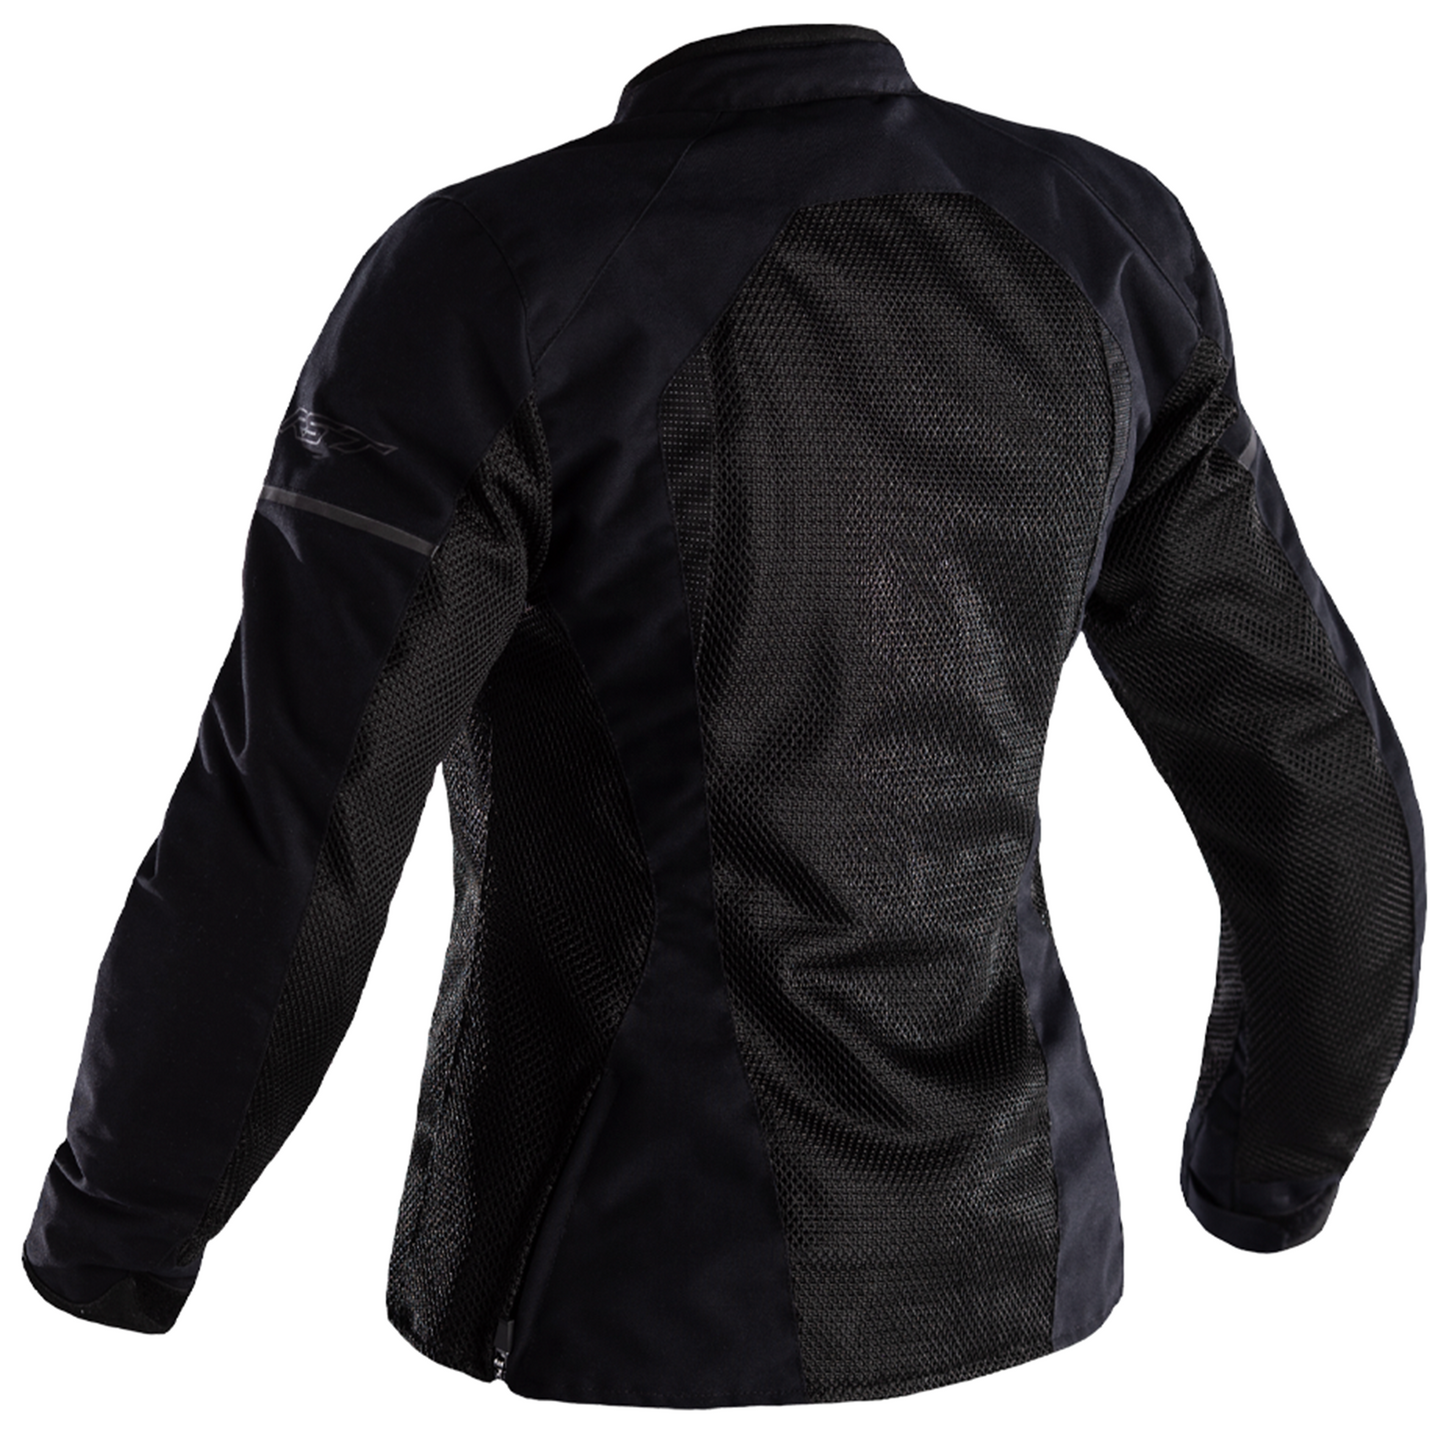 RST F-Lite CE Ladies Textile Jacket - Black (2575)